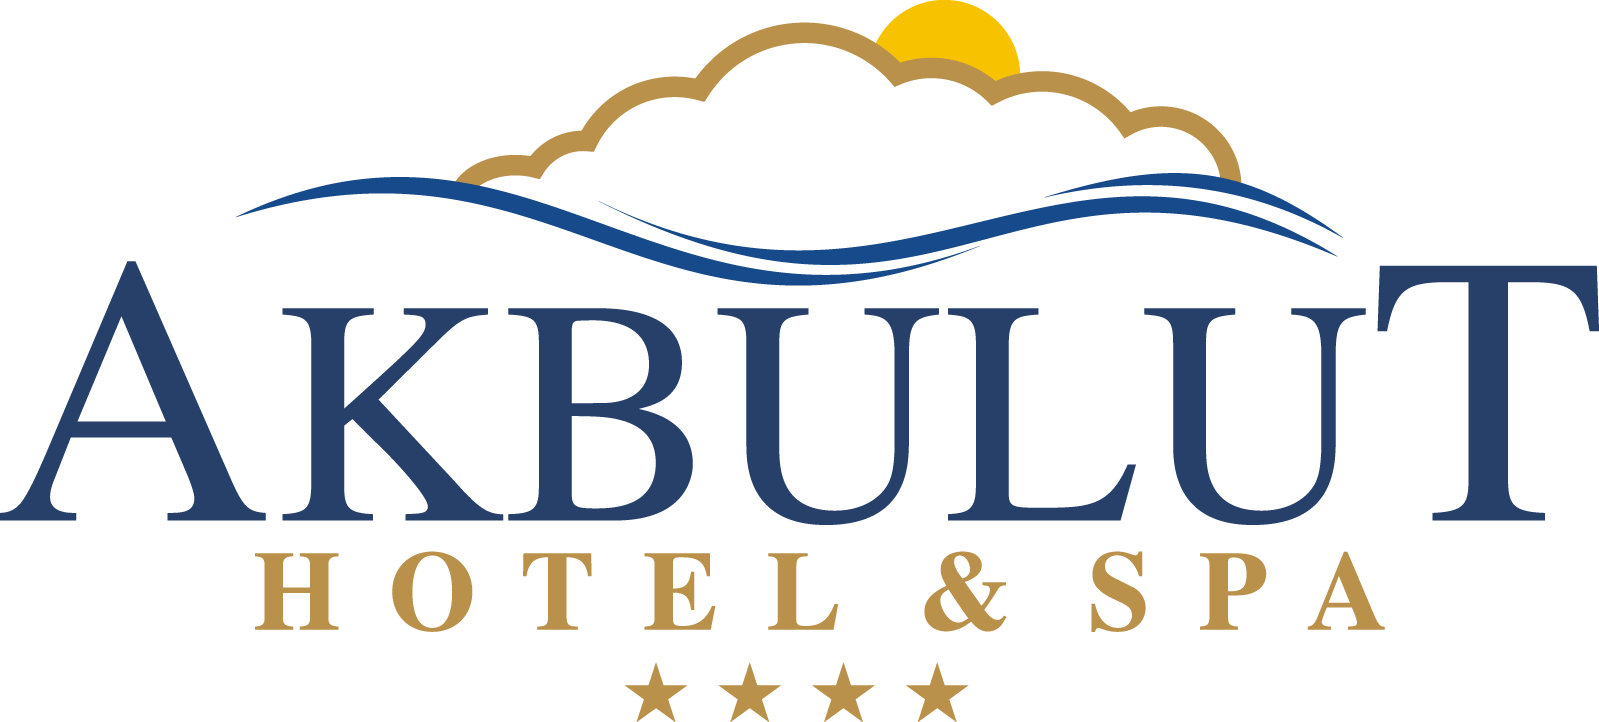 Hotel Akbulut Logo